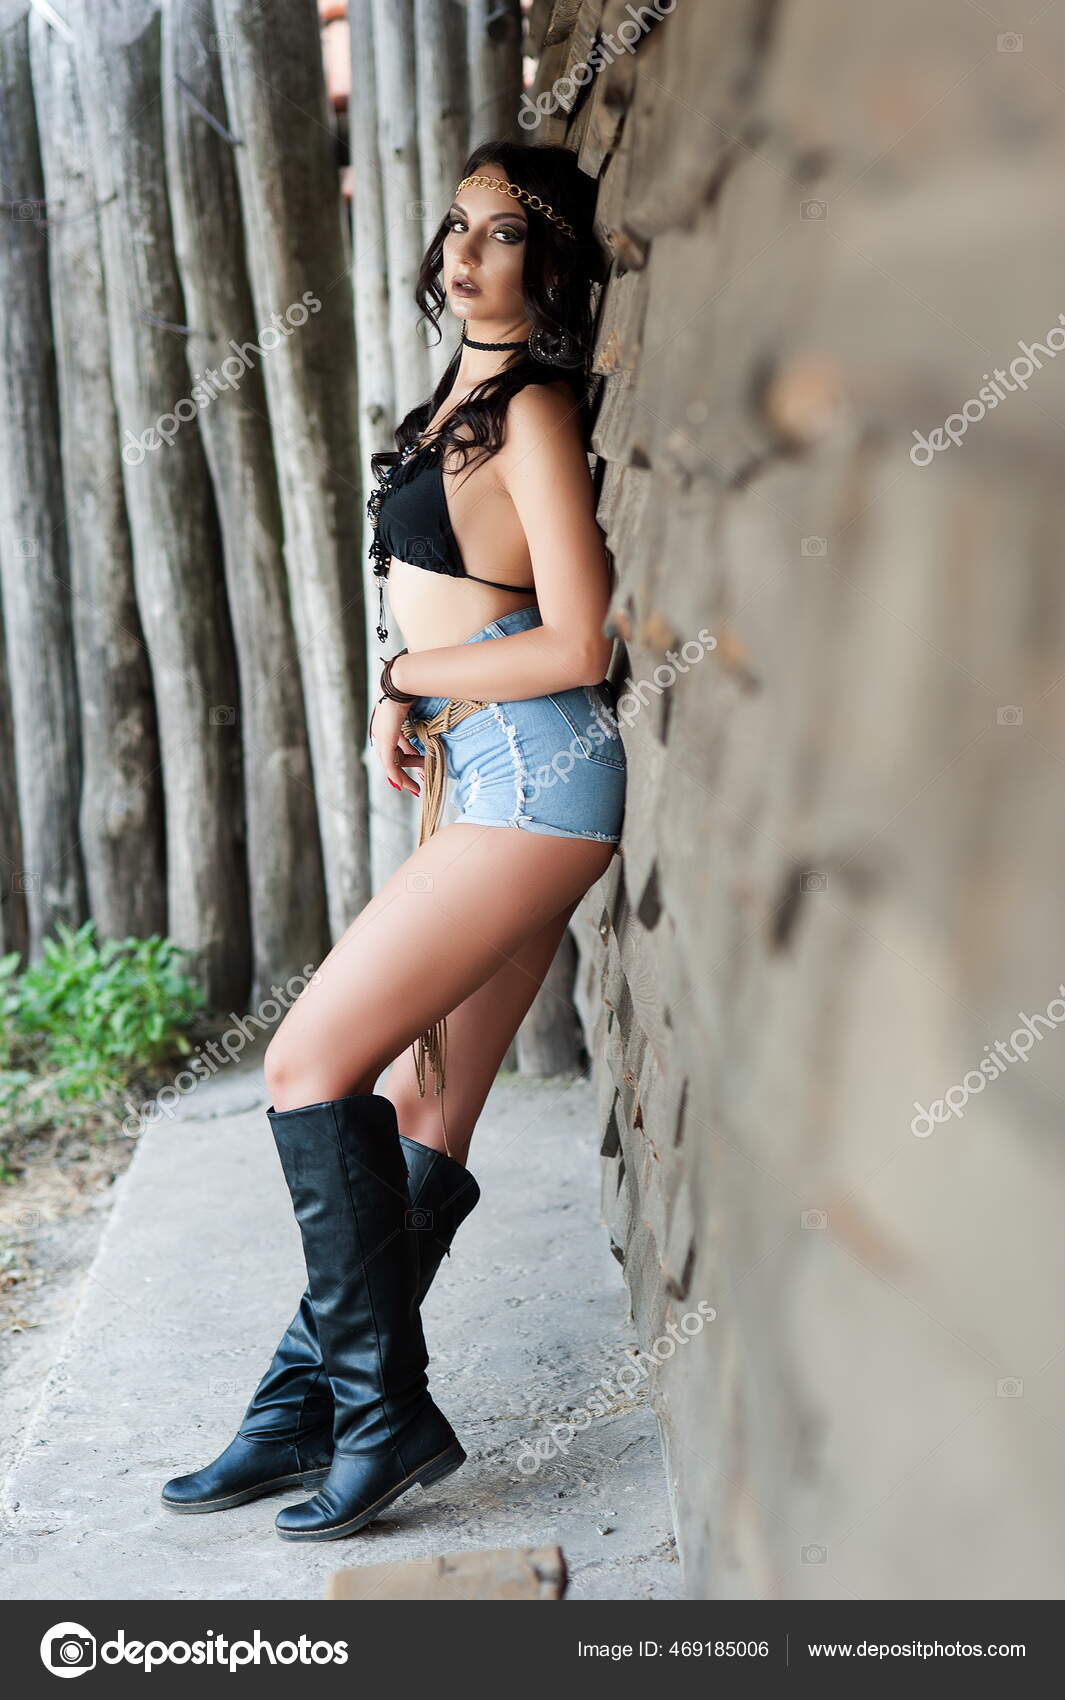 https://st2.depositphotos.com/1012146/46918/i/1600/depositphotos_469185006-stock-photo-beautiful-sexy-brunette-girl-dressed.jpg